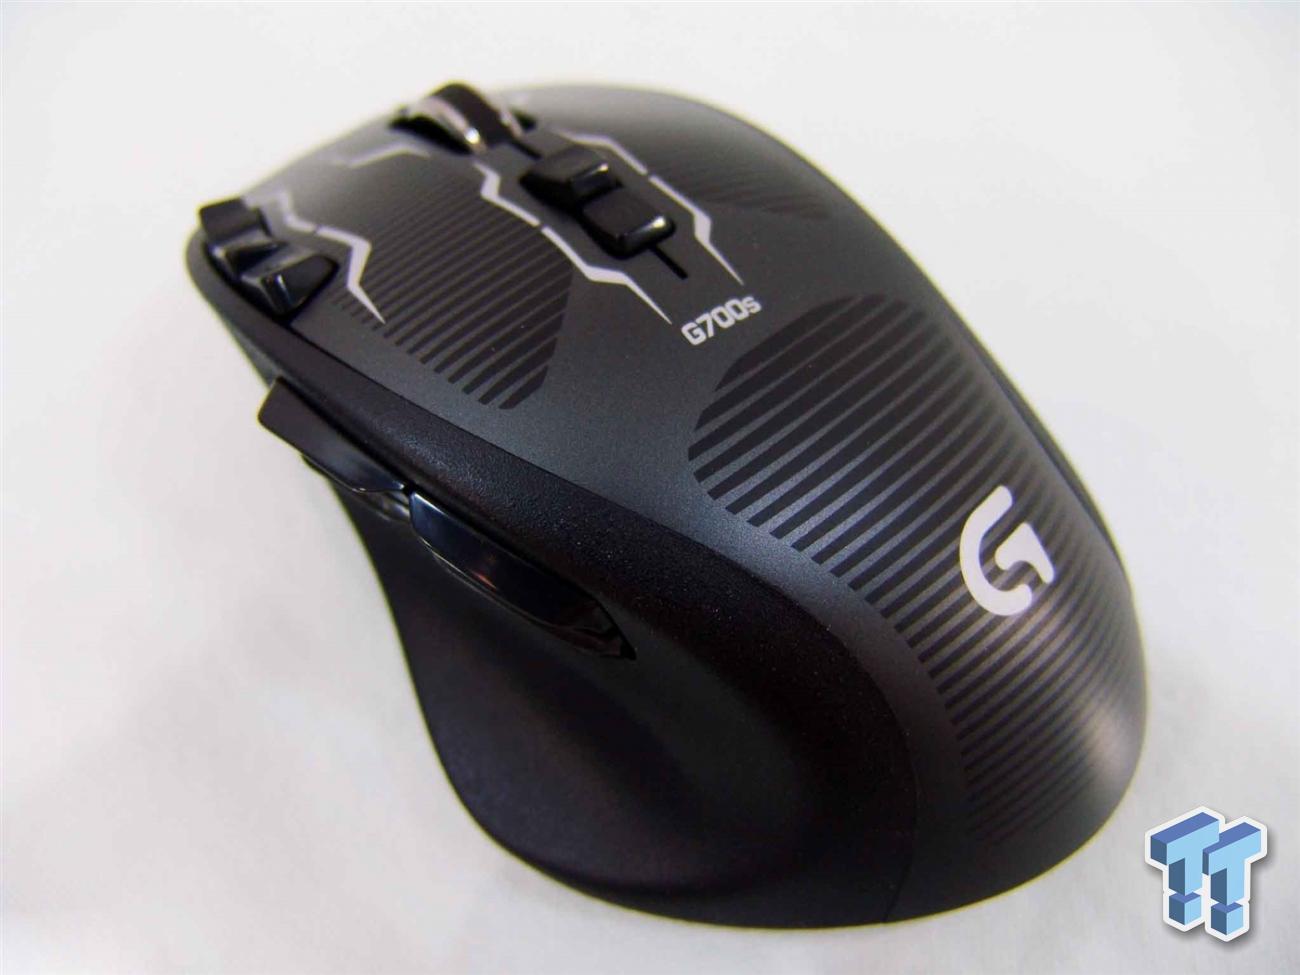 Logitech g700s. Logitech 700. Logitech g g700. Мышь Logitech g g700s Rechargeable Gaming Mouse Black USB.